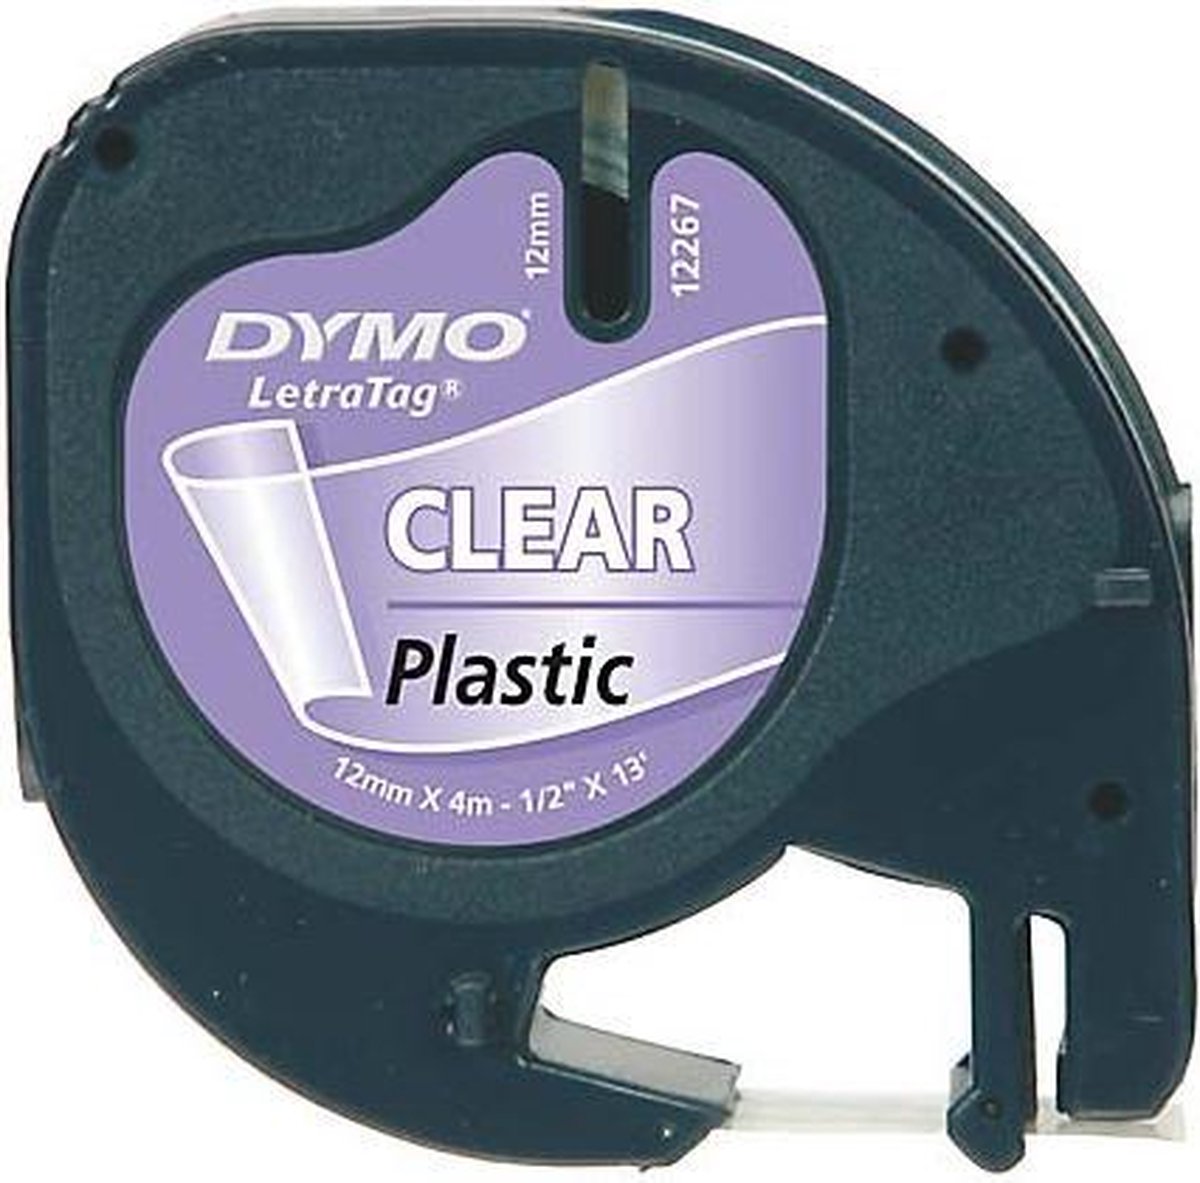 Dymo-Tape-Cassette-Plastic-transparant-12-mm-x-4-m-16951